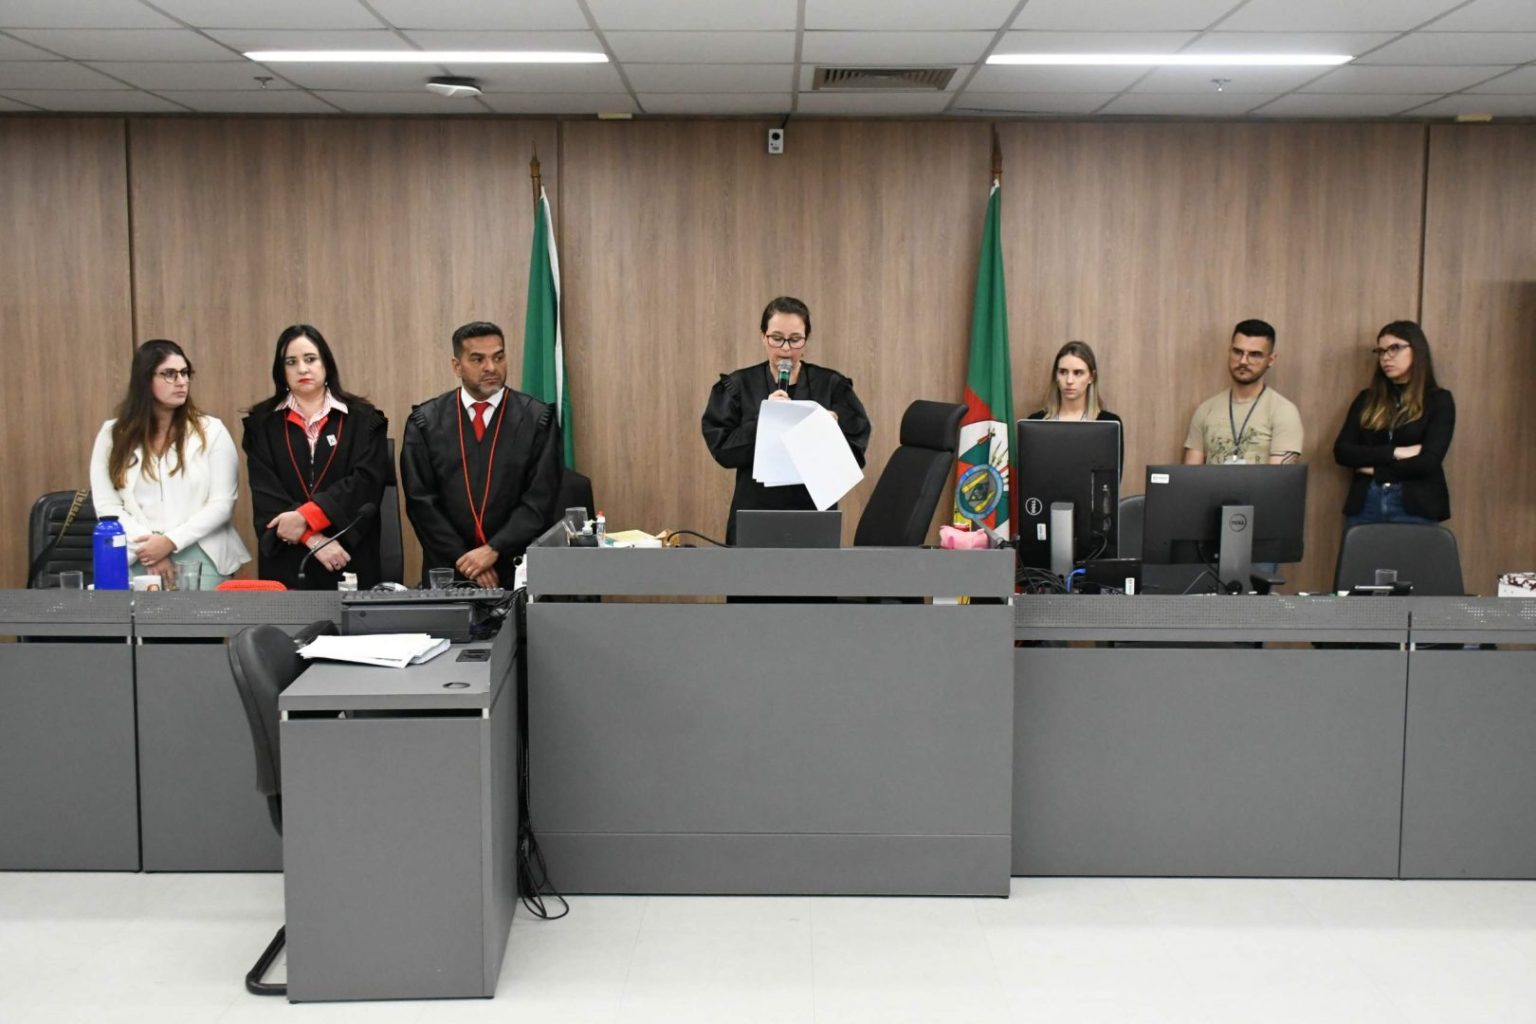 O Tribunal do Júri foi presidido pela juíza Anna Alice Schuh Foto: Leonardo Radde/TJR